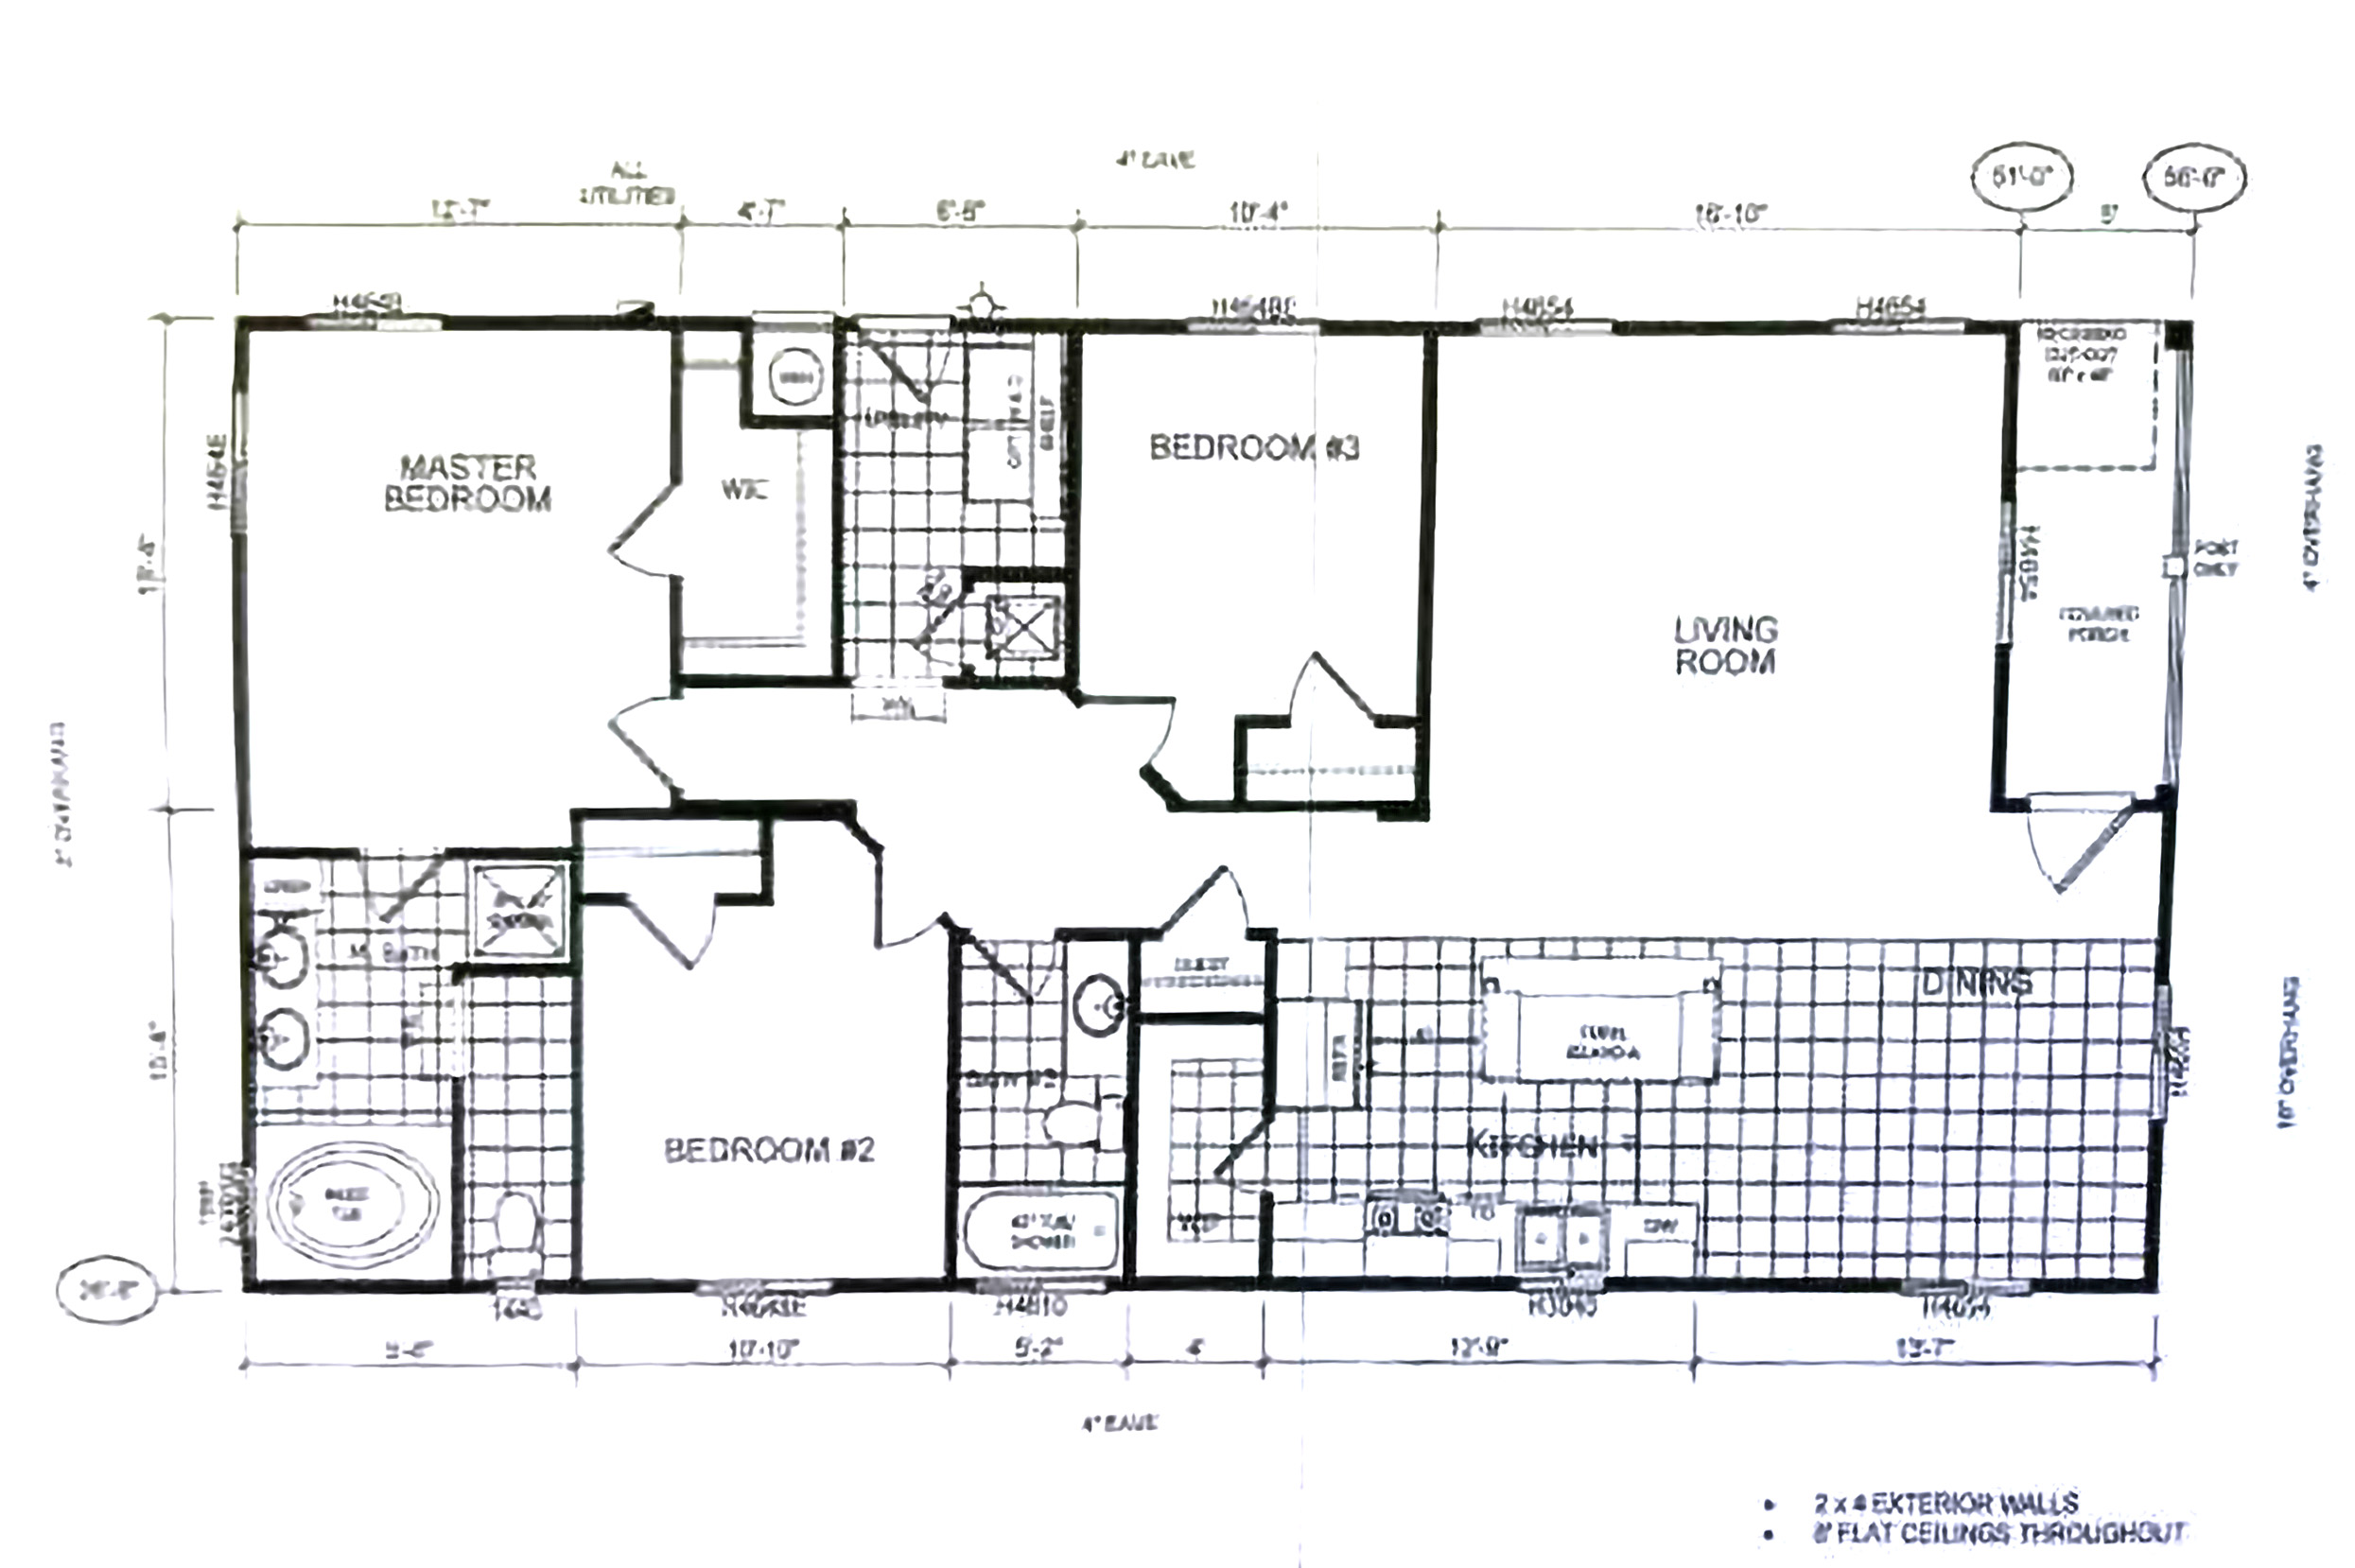 5 Star Homes - Residence 4 - Stanton, CA Floorplan